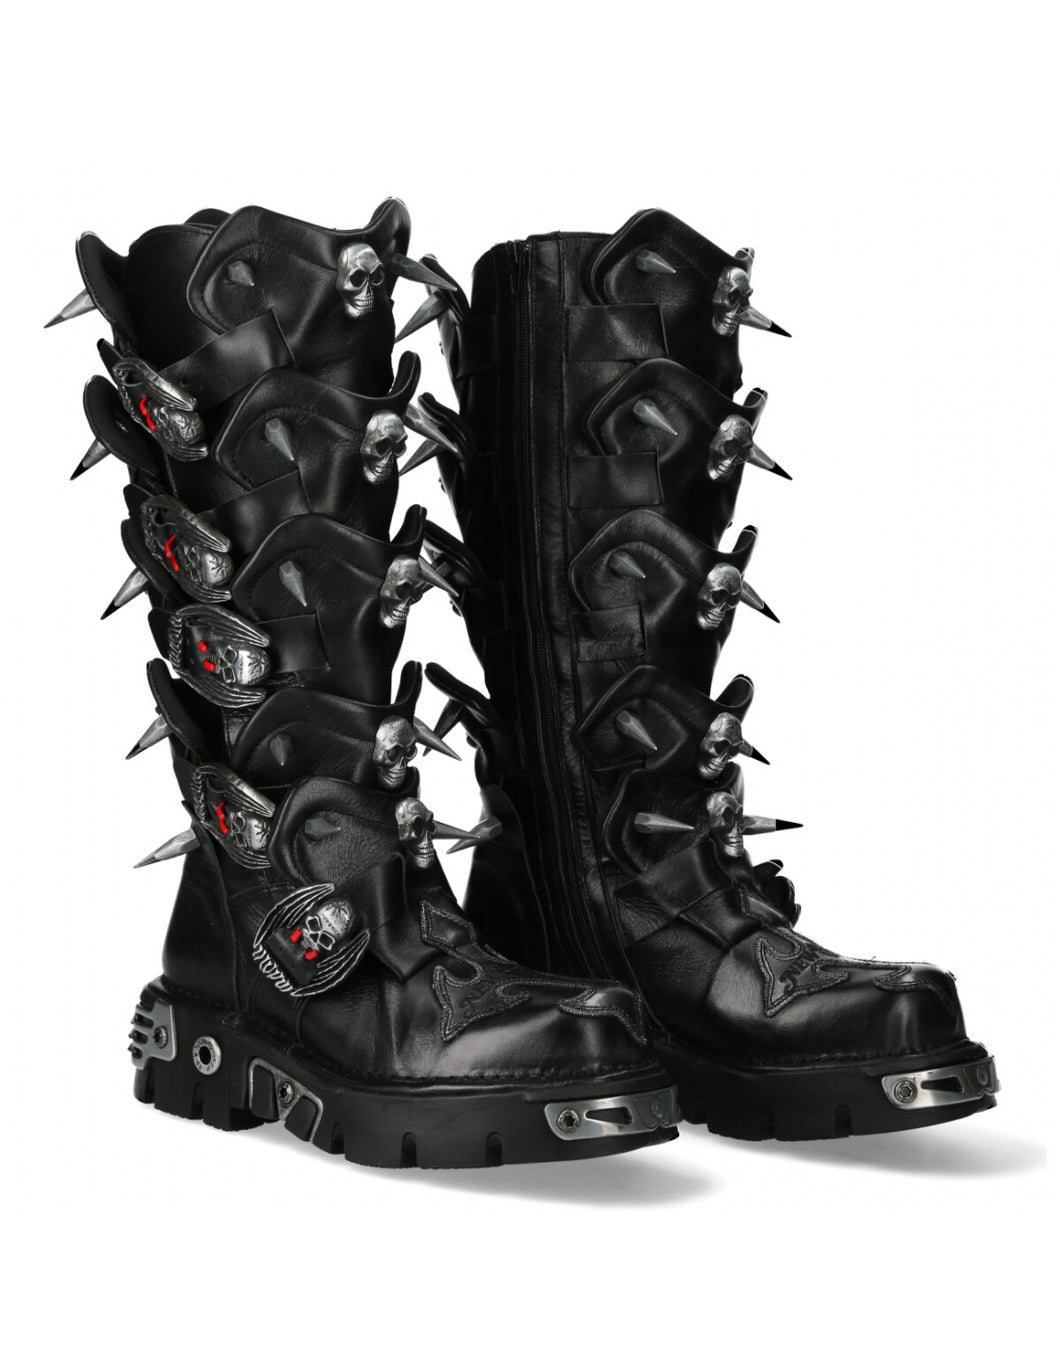 New Rock Schuhe Shoes High Boots Stiefel M-755-C1 Echtleder